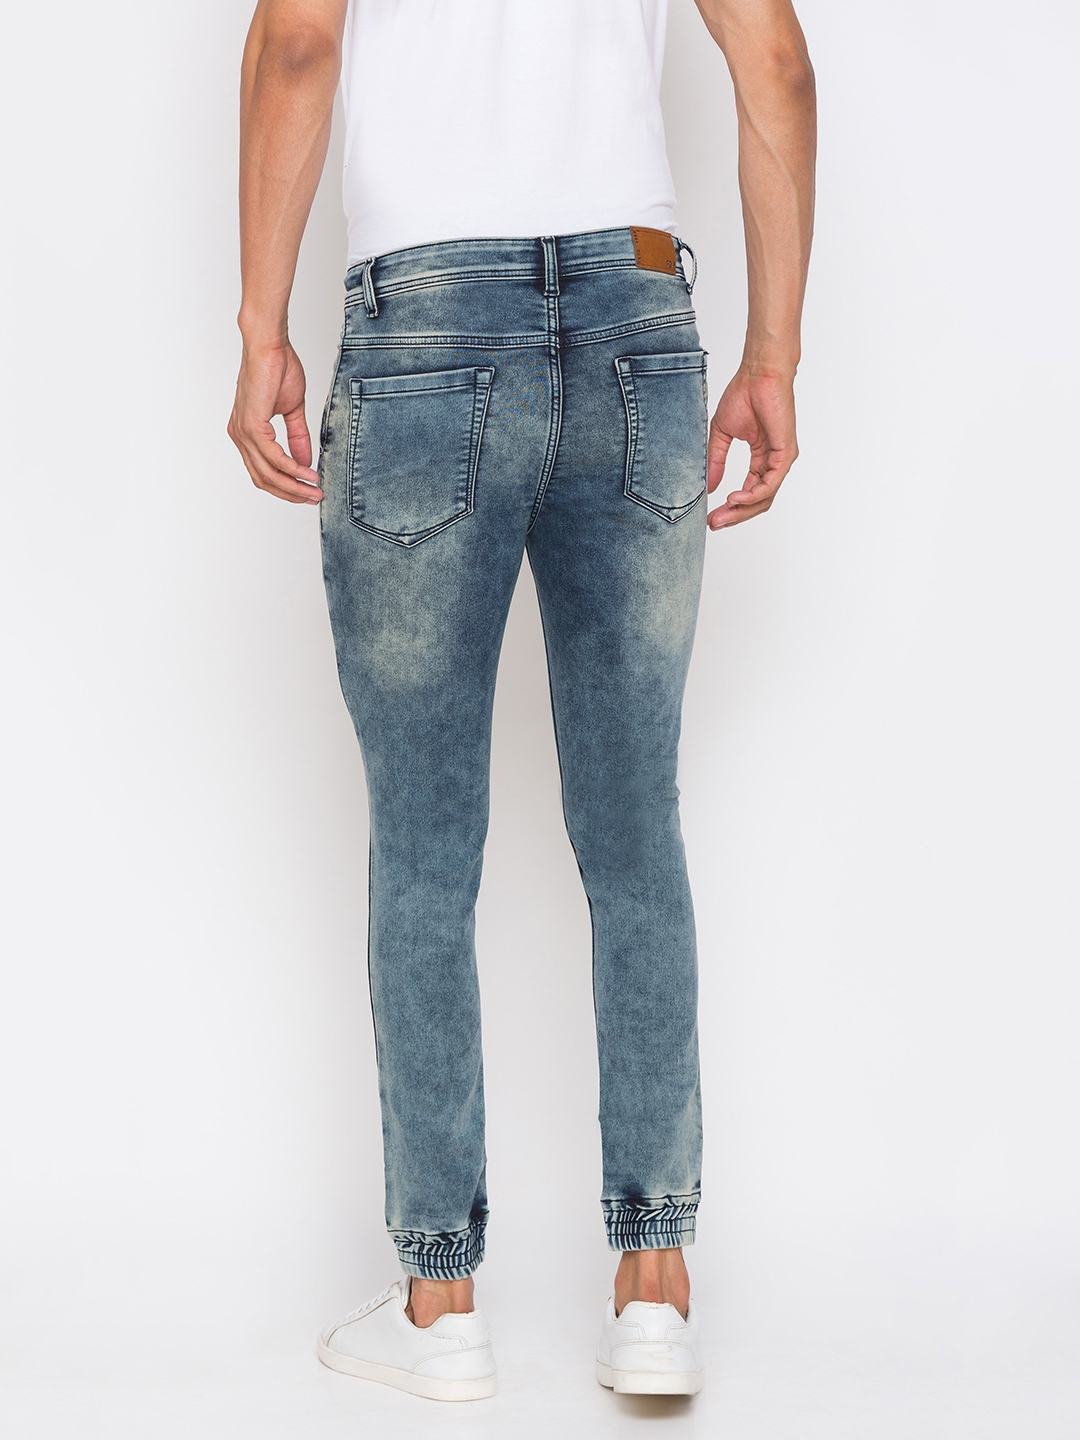 globus | Men's Blue Denim Solid Joggers Jeans 2